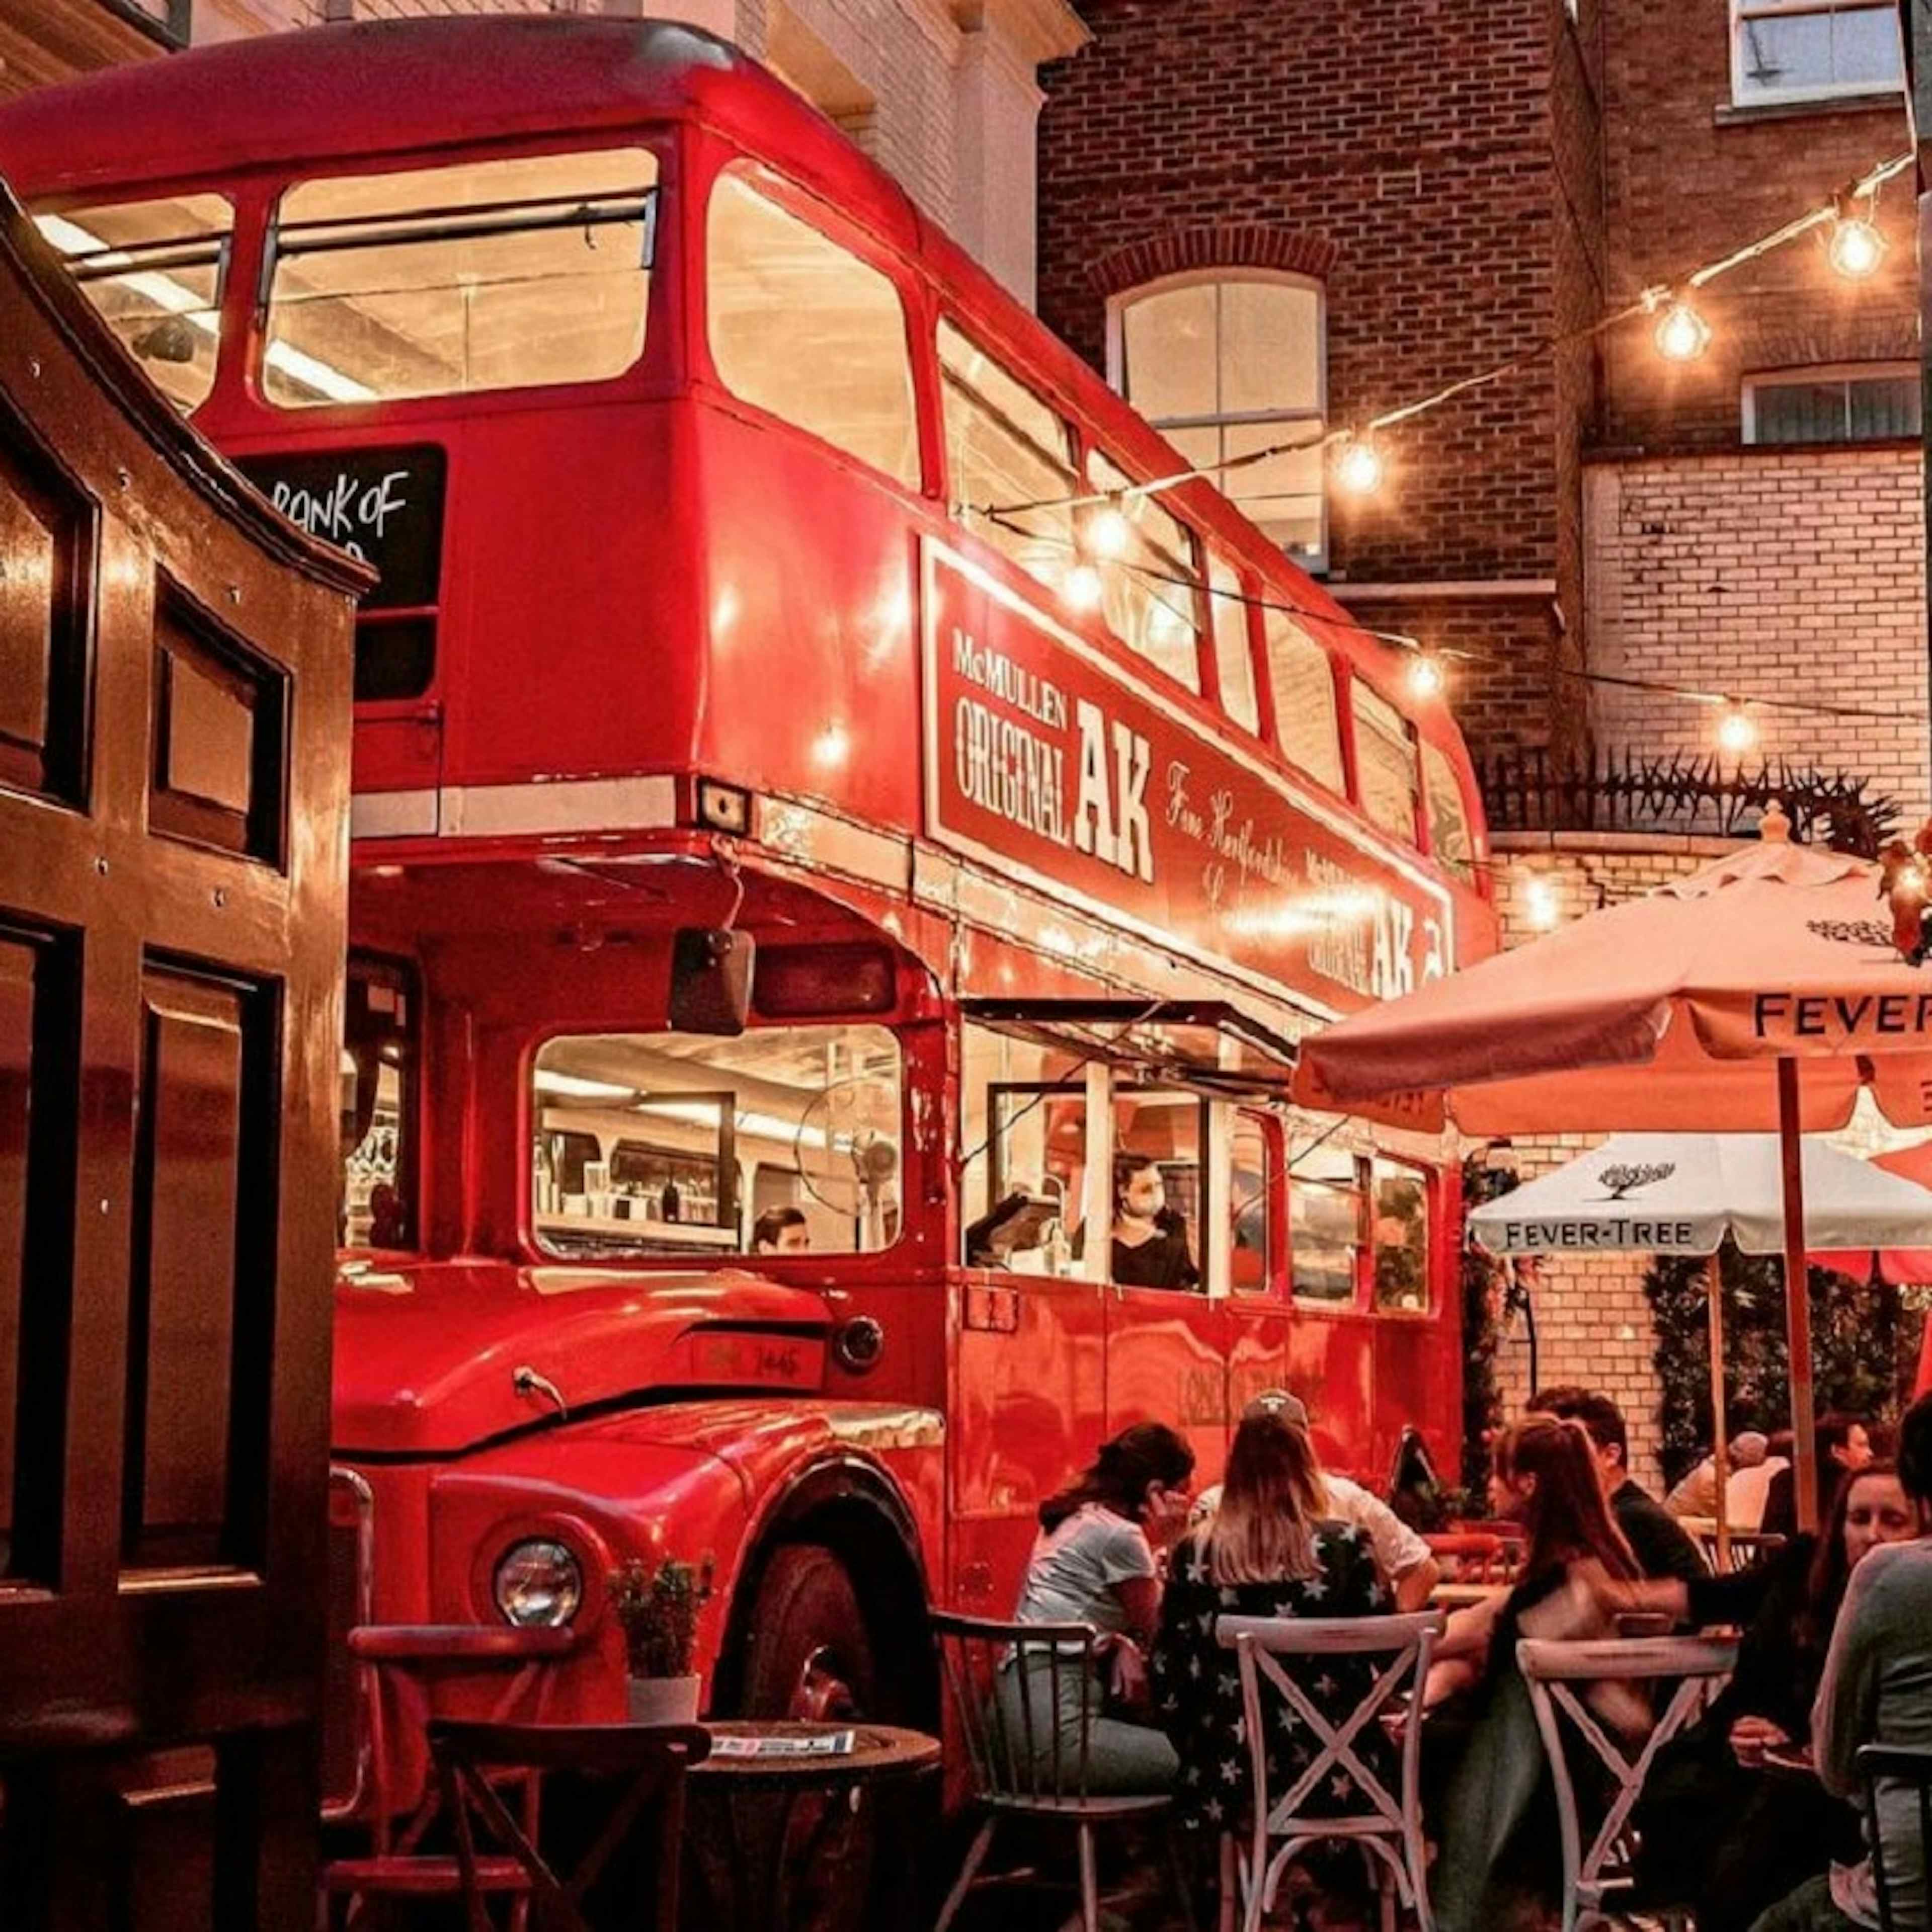 The London Pub With A Double-Decker Bus Bar